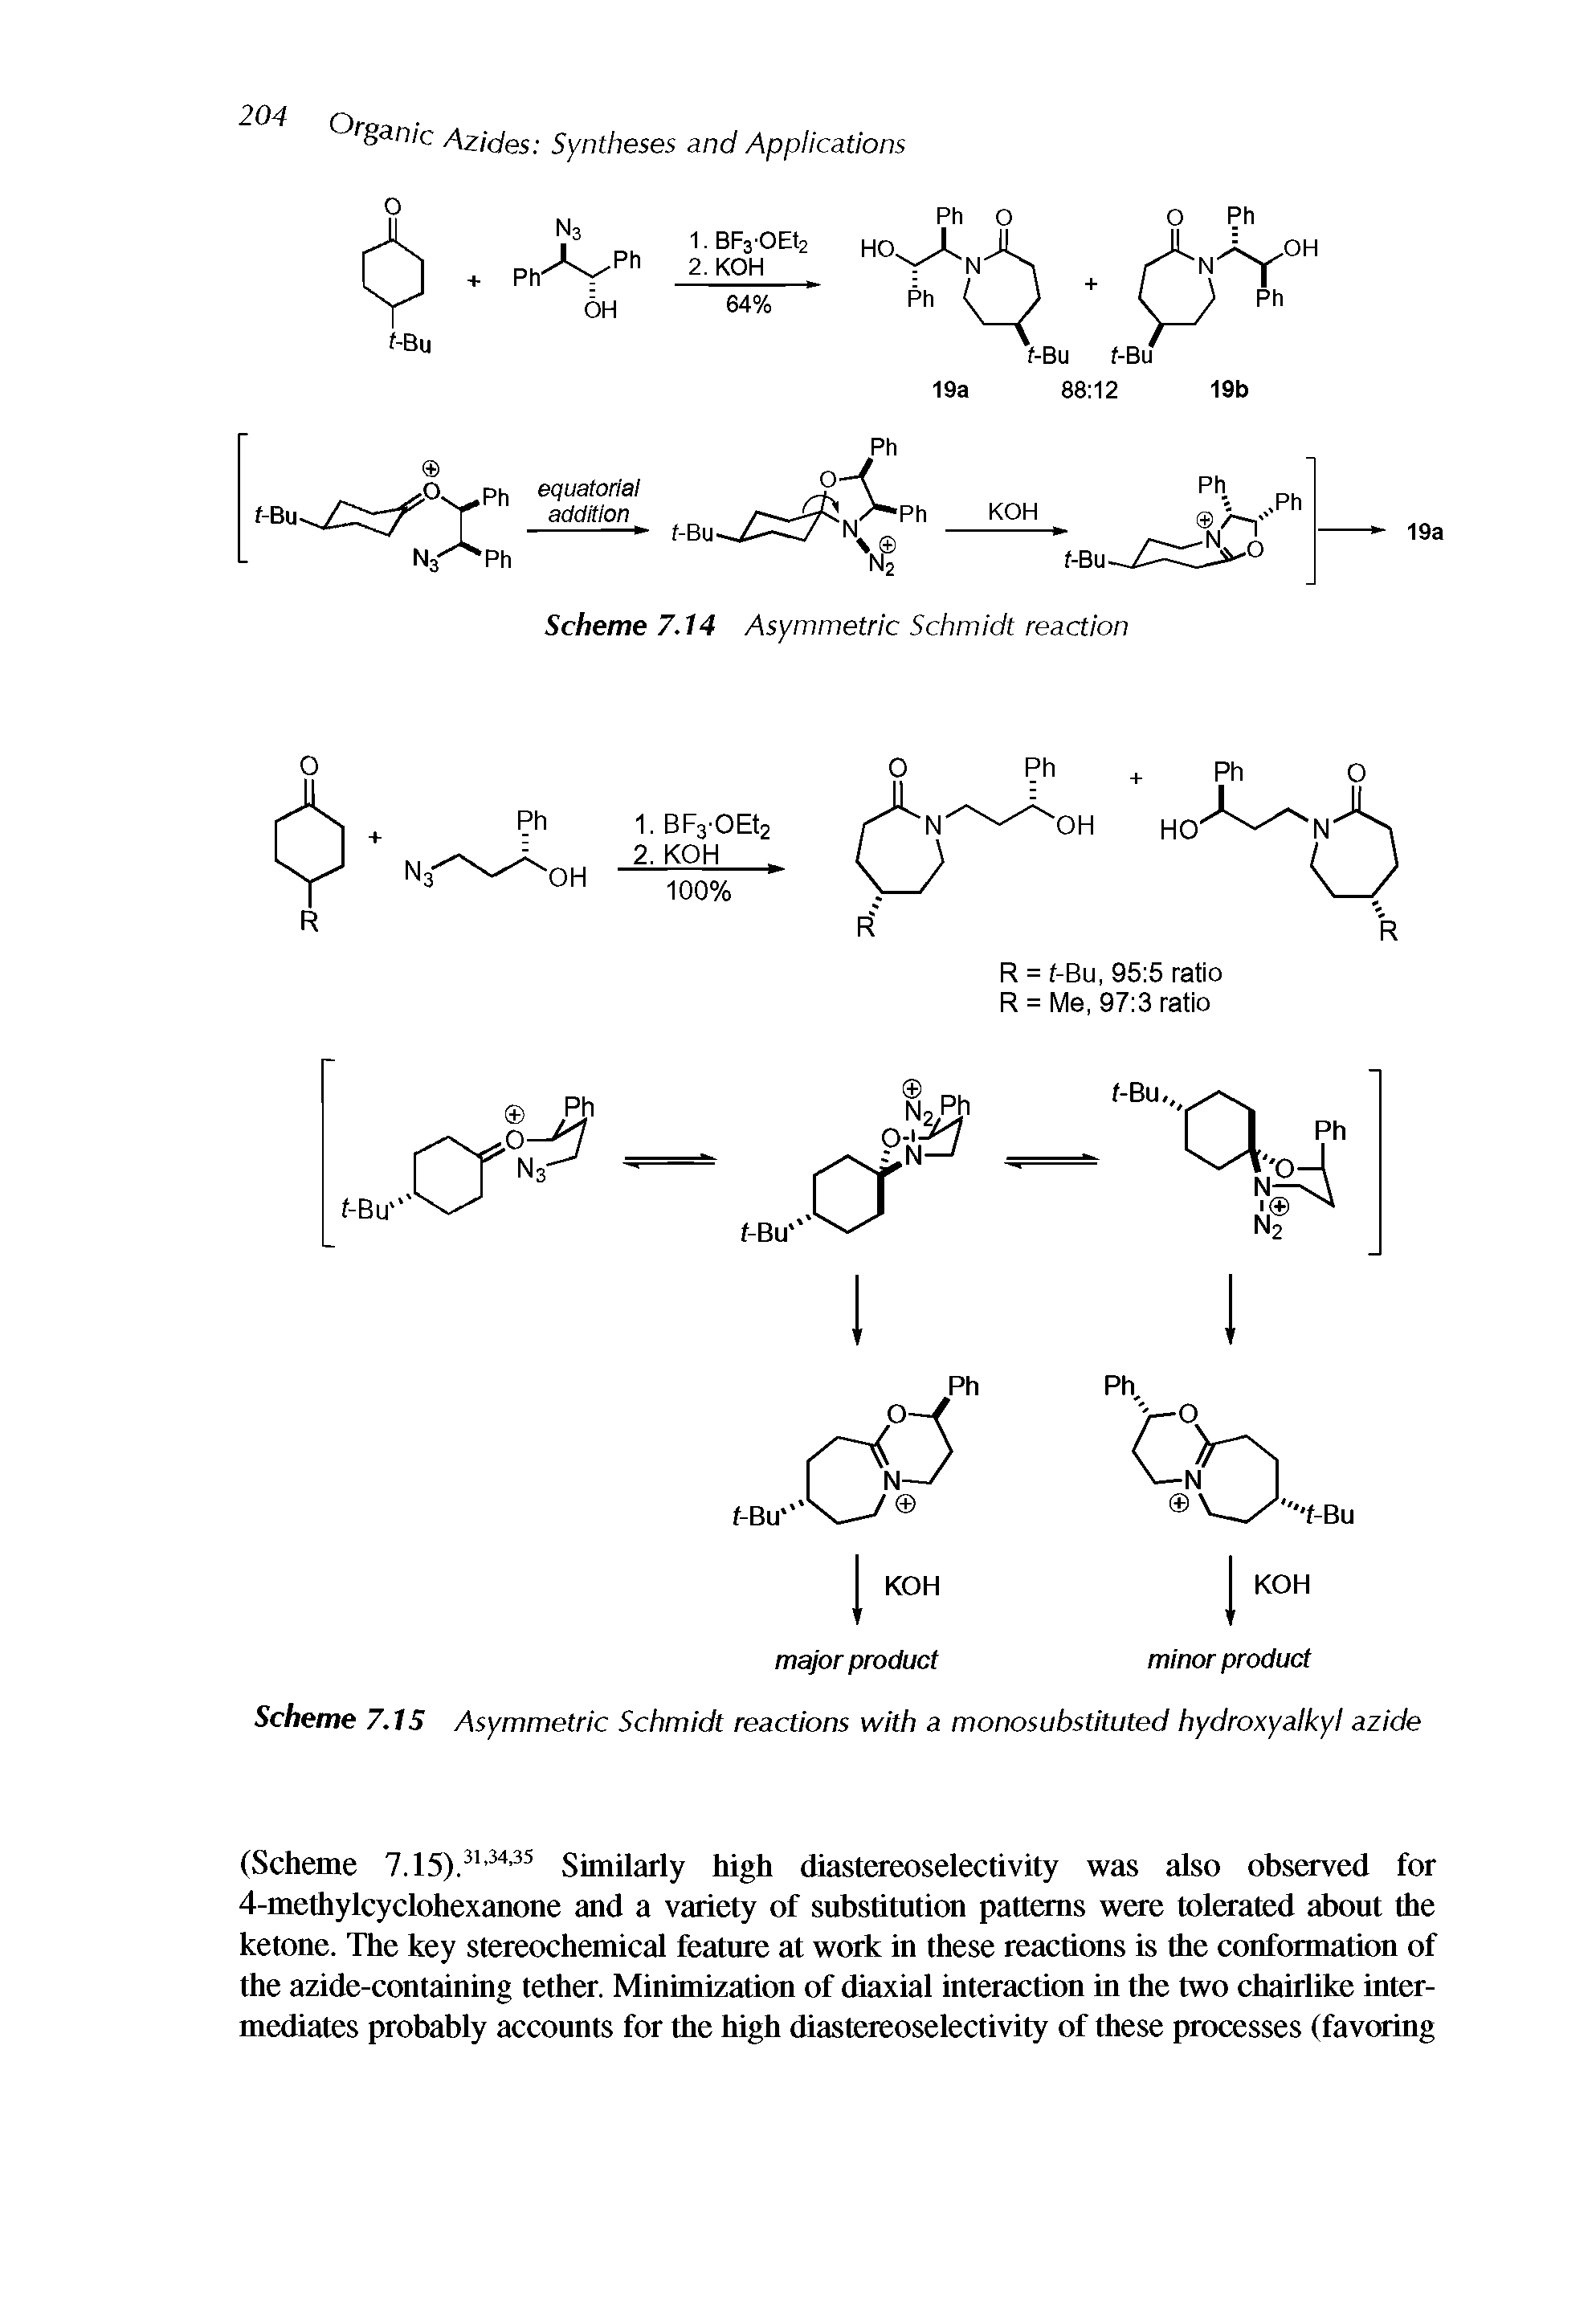 Scheme 7.15 Asymmetric Schmidt reactions with a monosubstituted hydroxyalkyl azide...